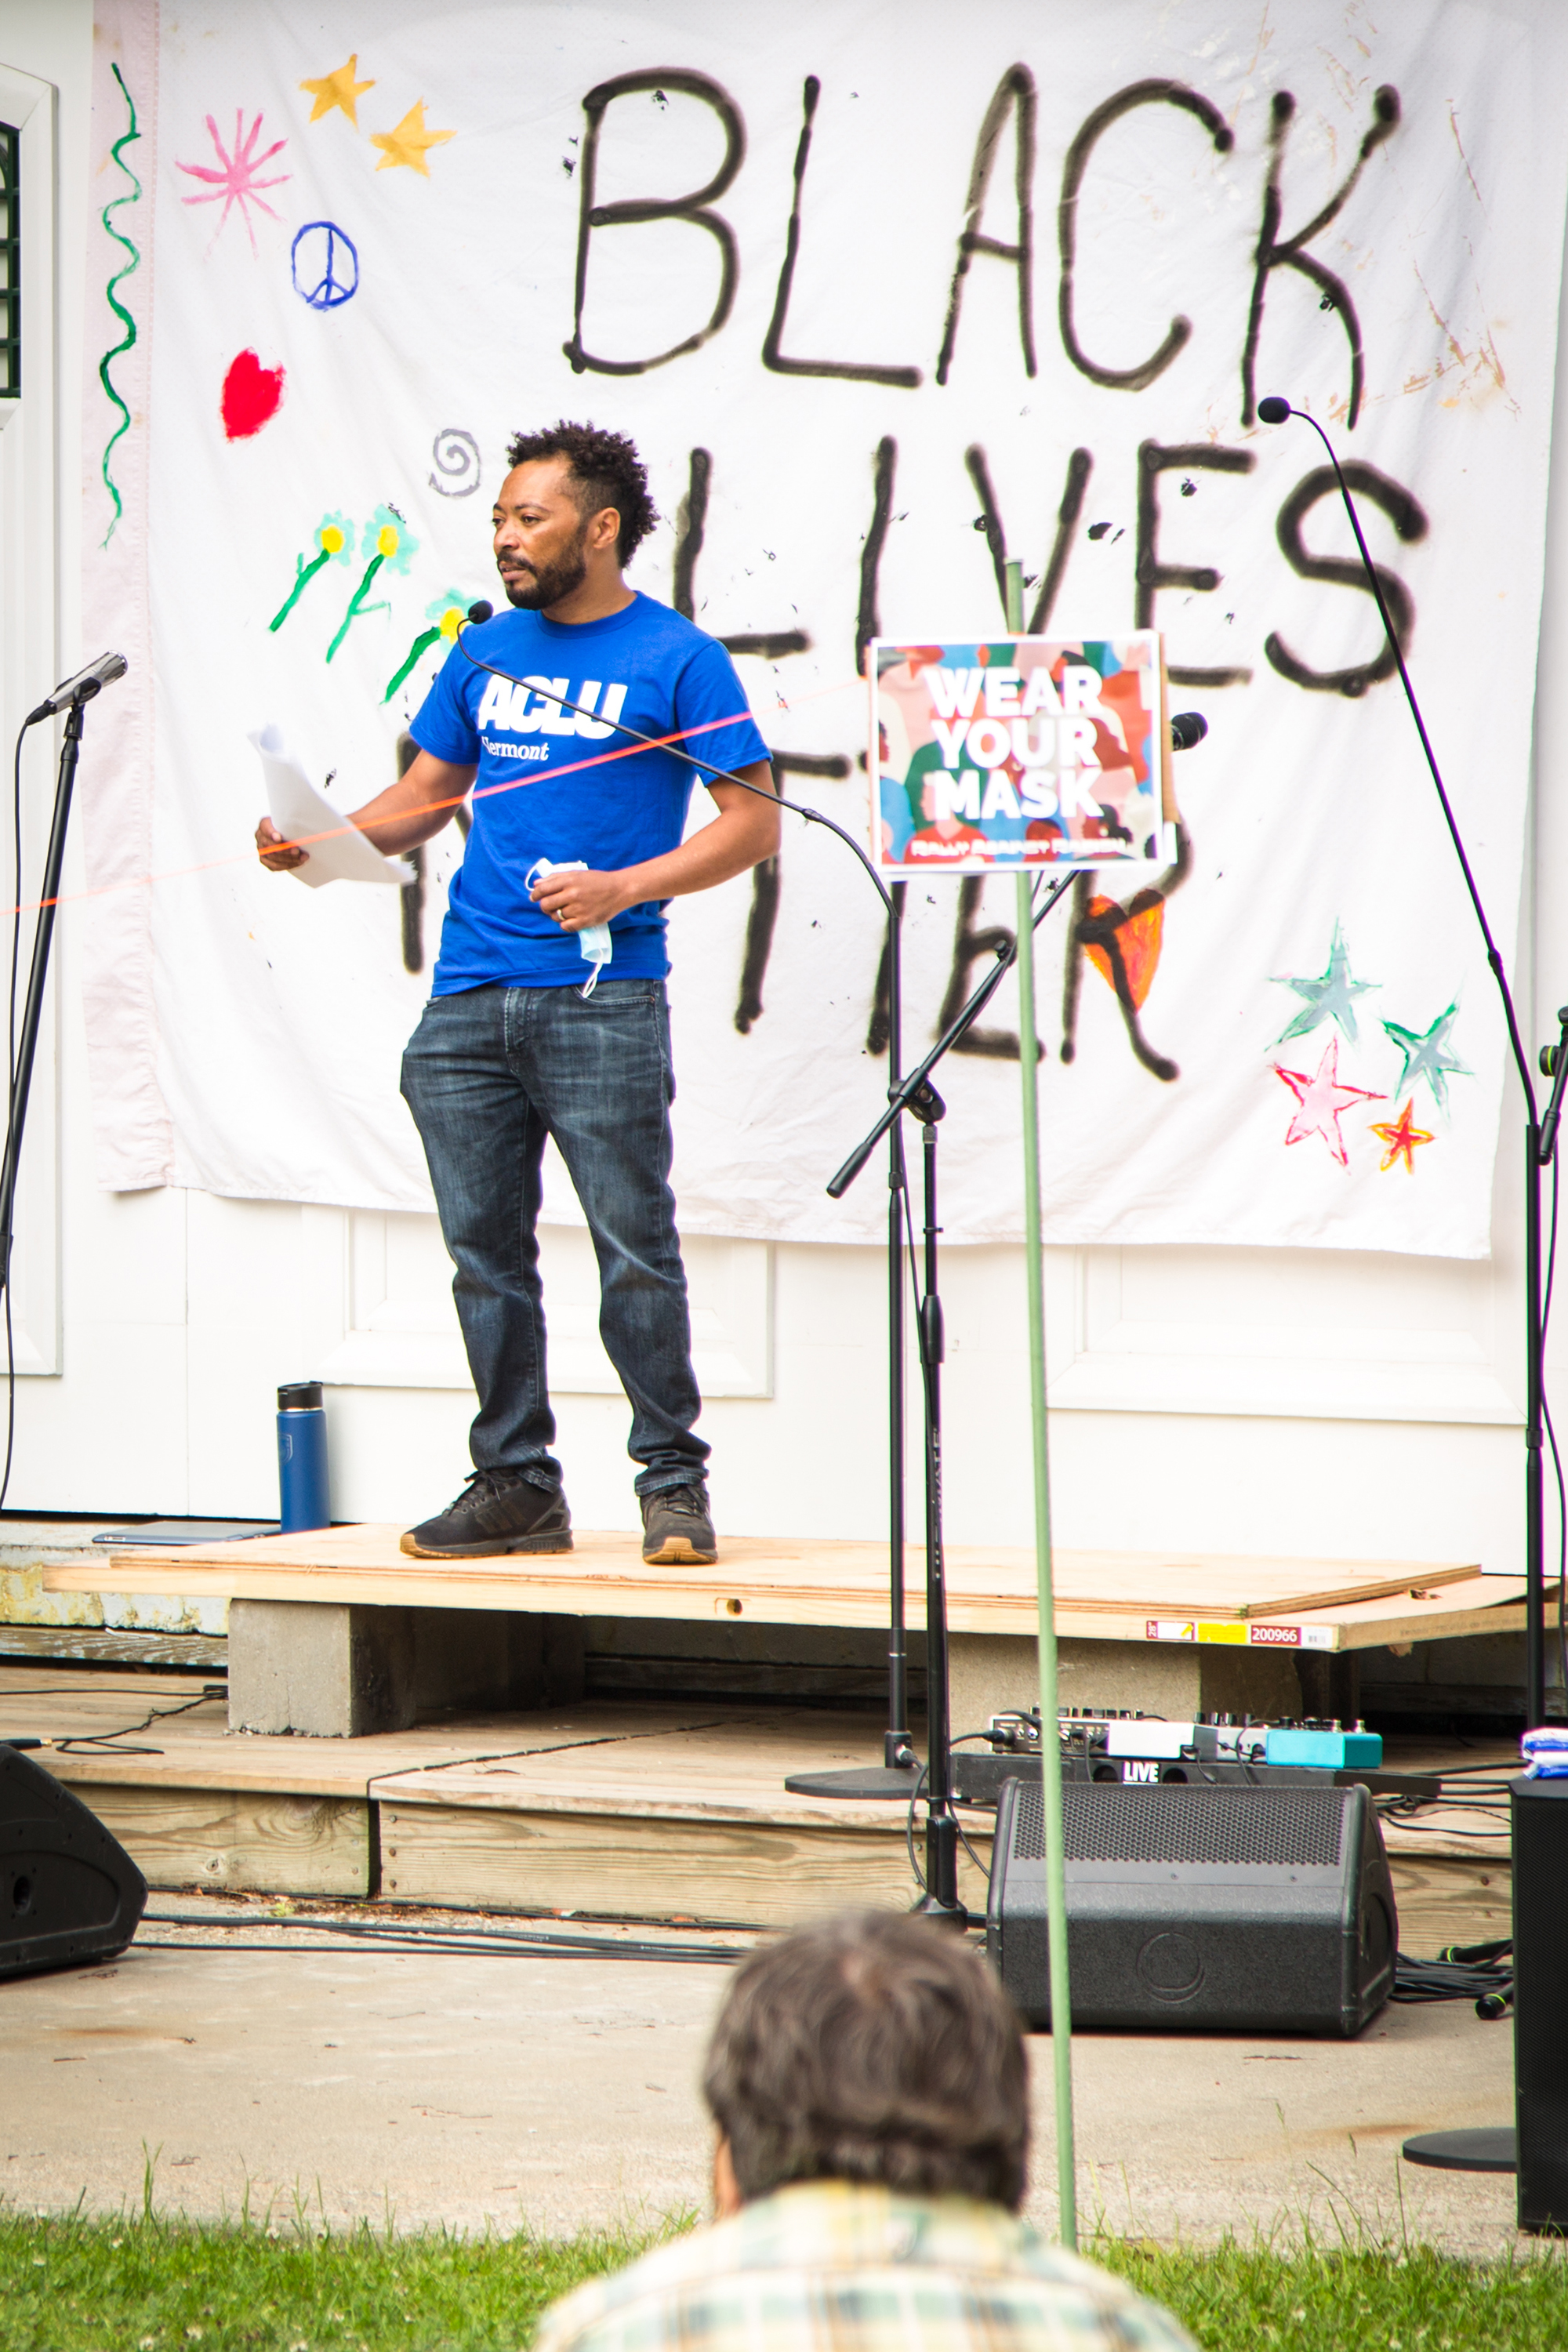 Speaker on a stage in front of a 'BLACK LIVES MATTER' banner